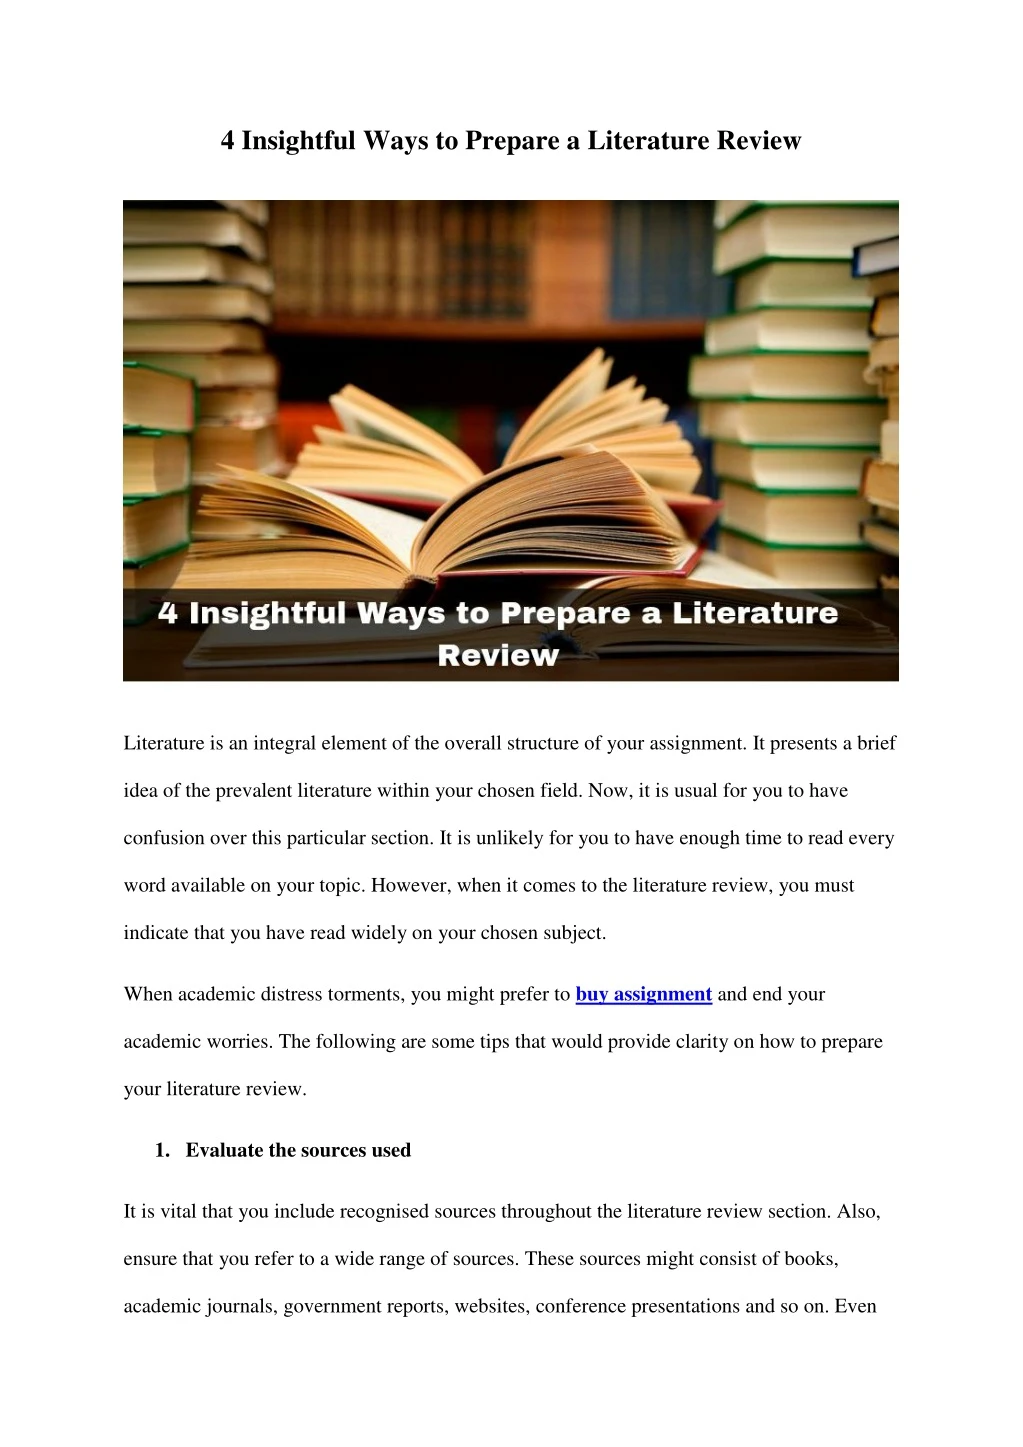 4 insightful ways to prepare a literature review